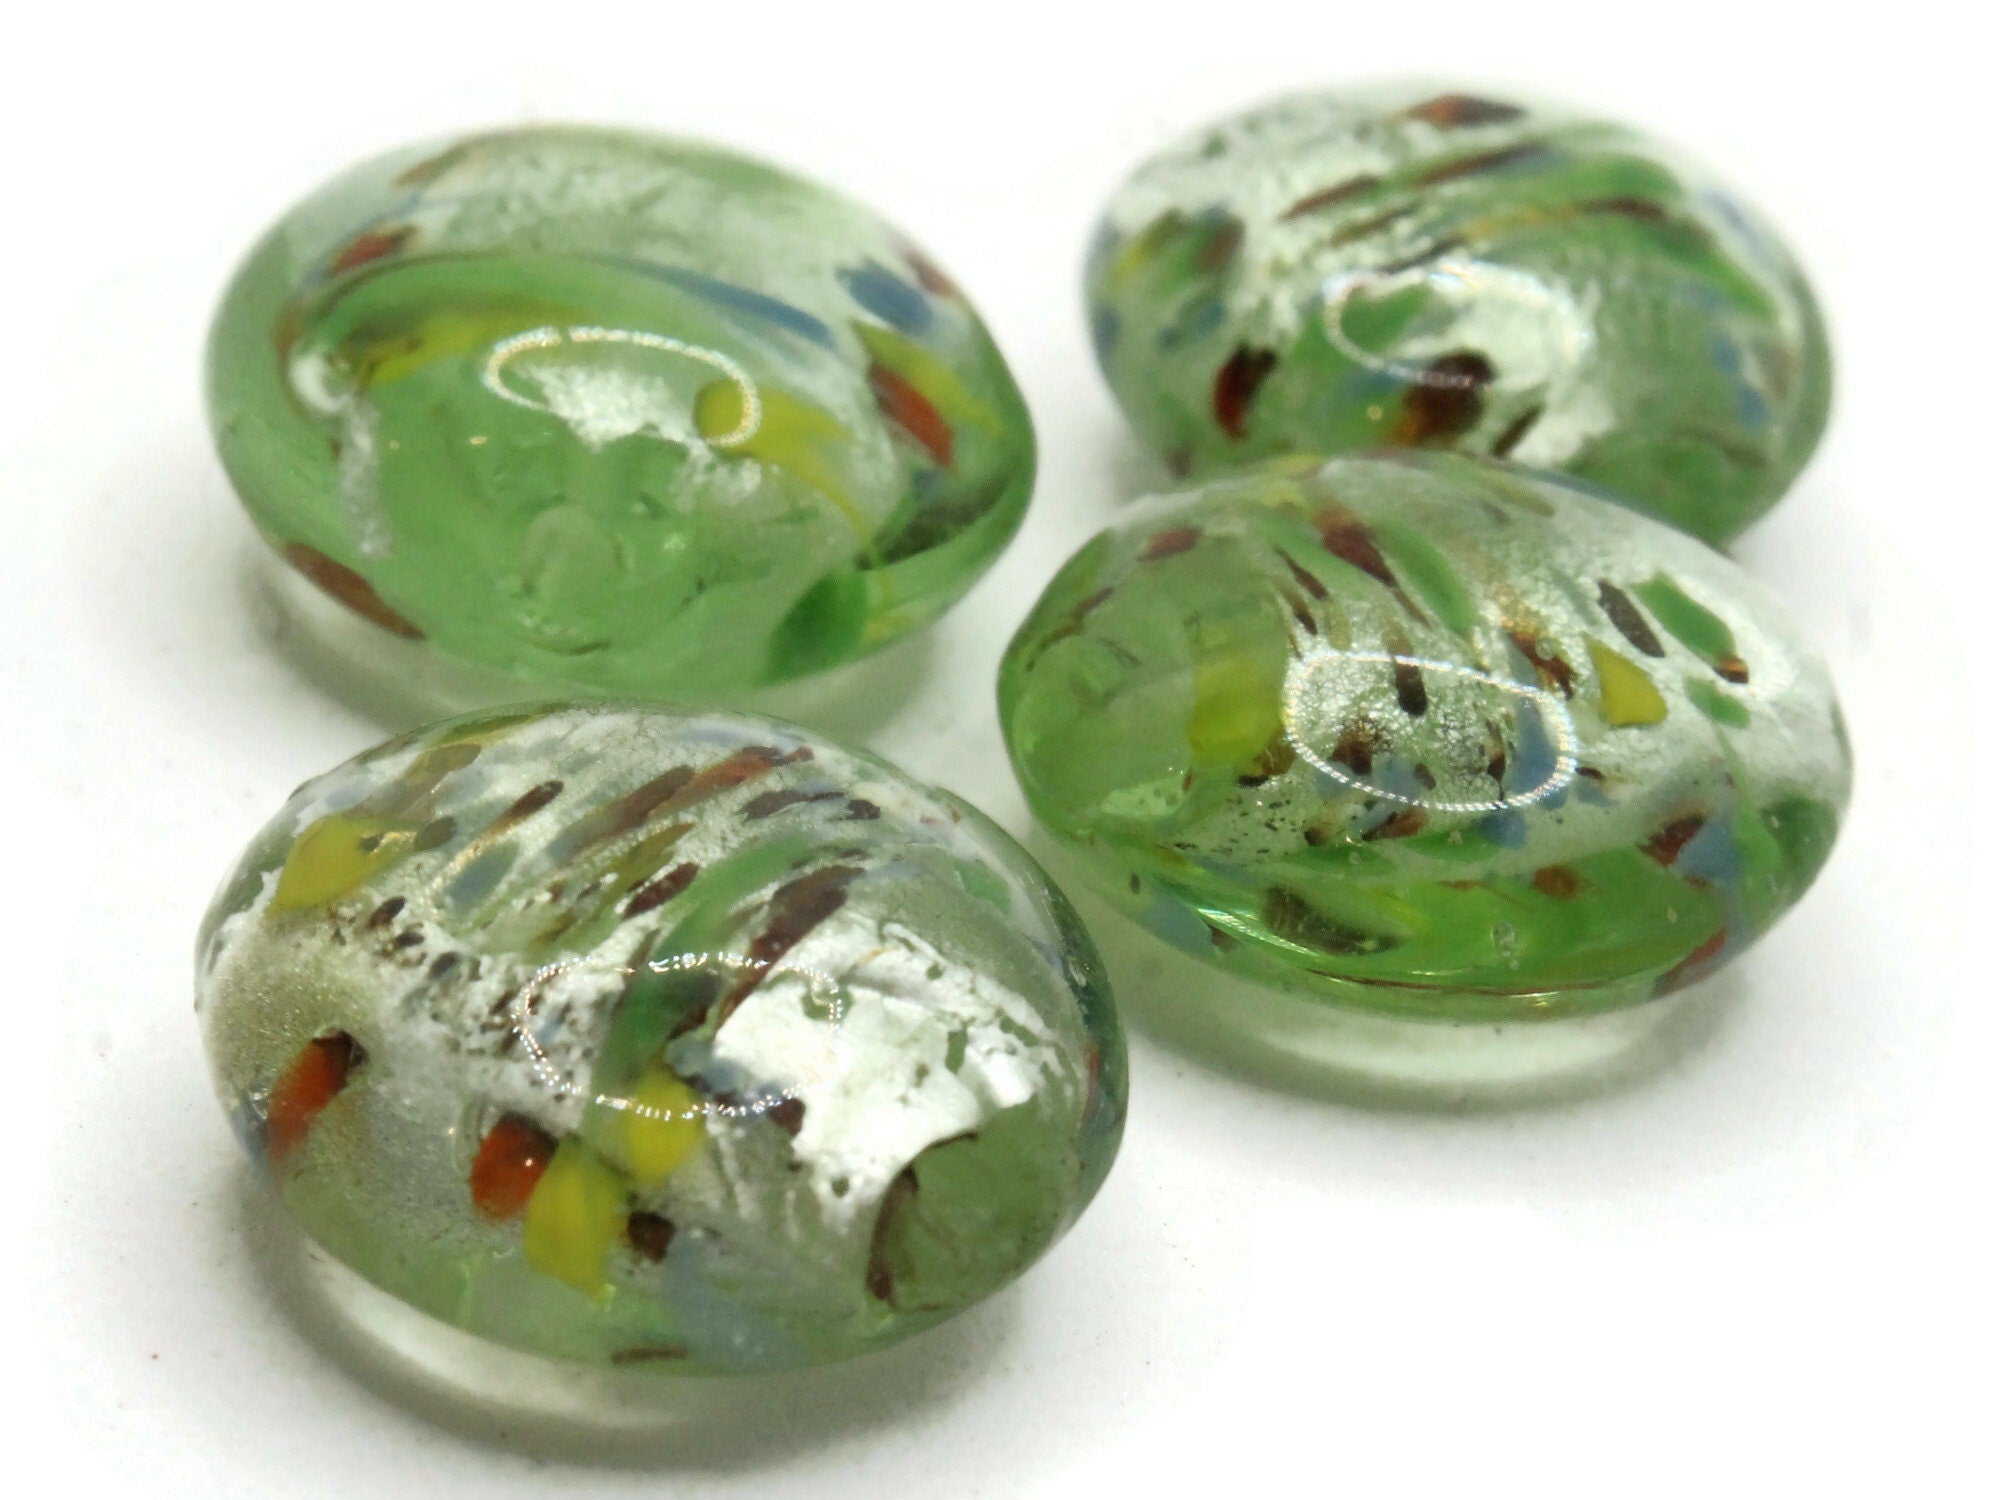 Glass Flat Marbles, Green